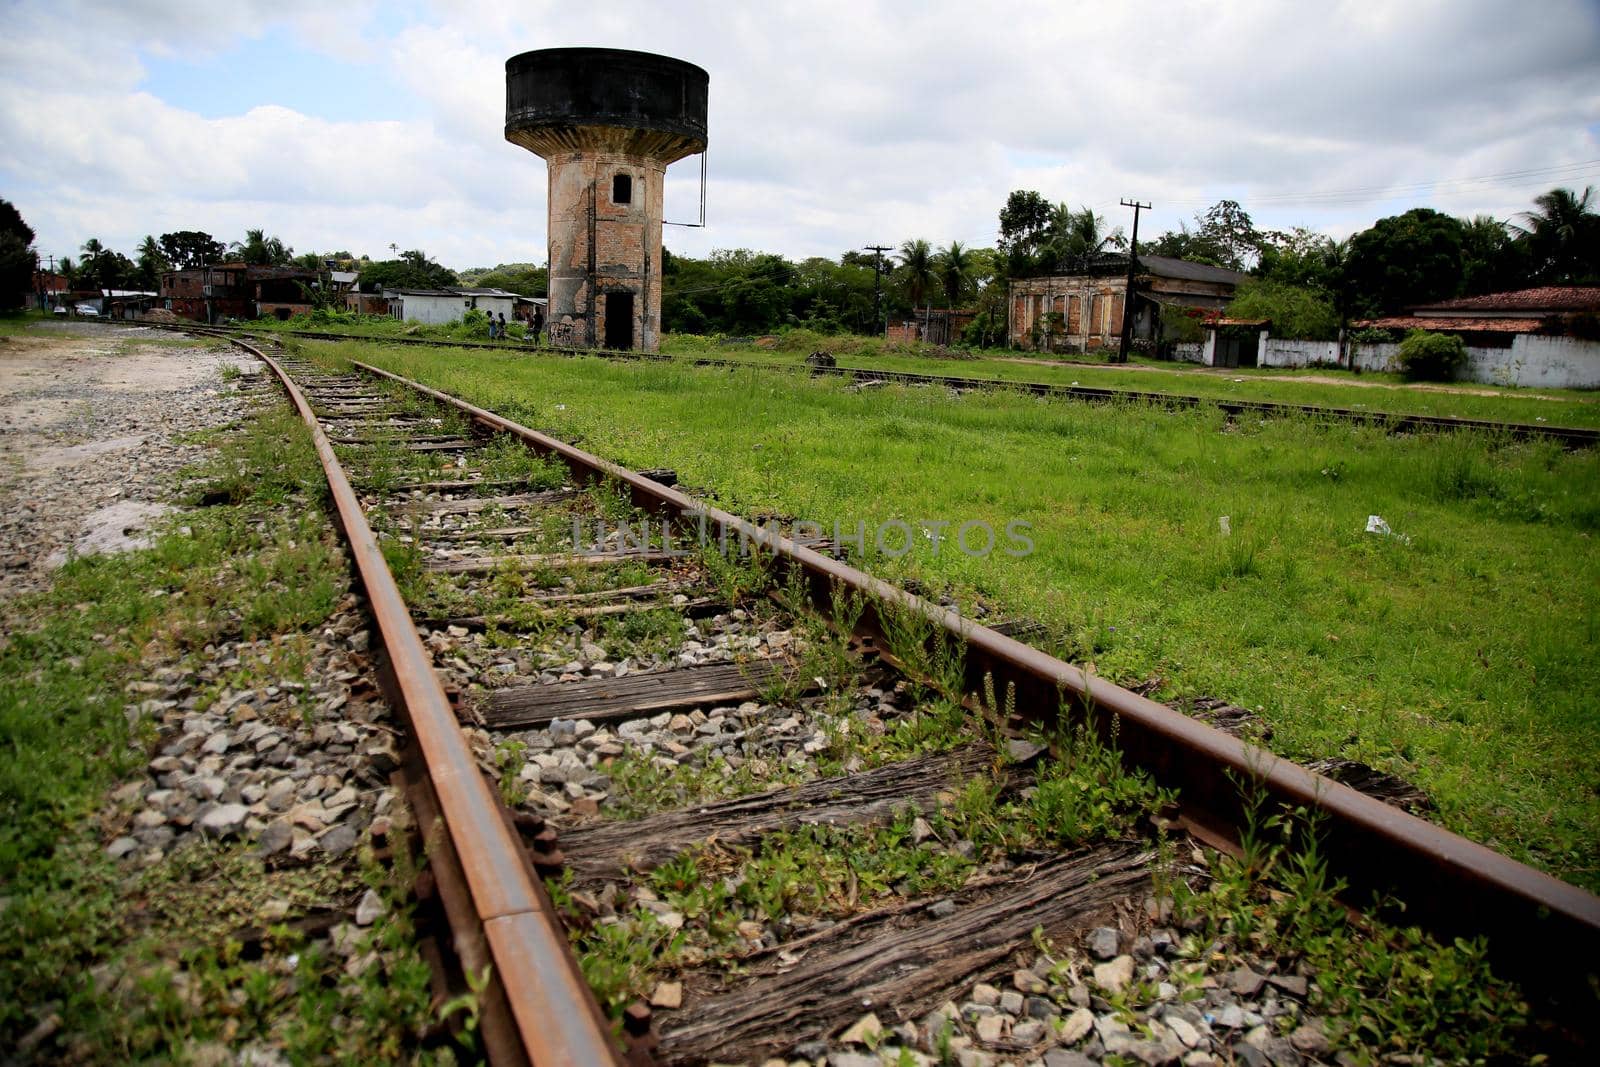 mata de sao joao, bahia / brazil - september 29, 2020: water tank at an abandoned train station in the city of Mata de Sao Joao.